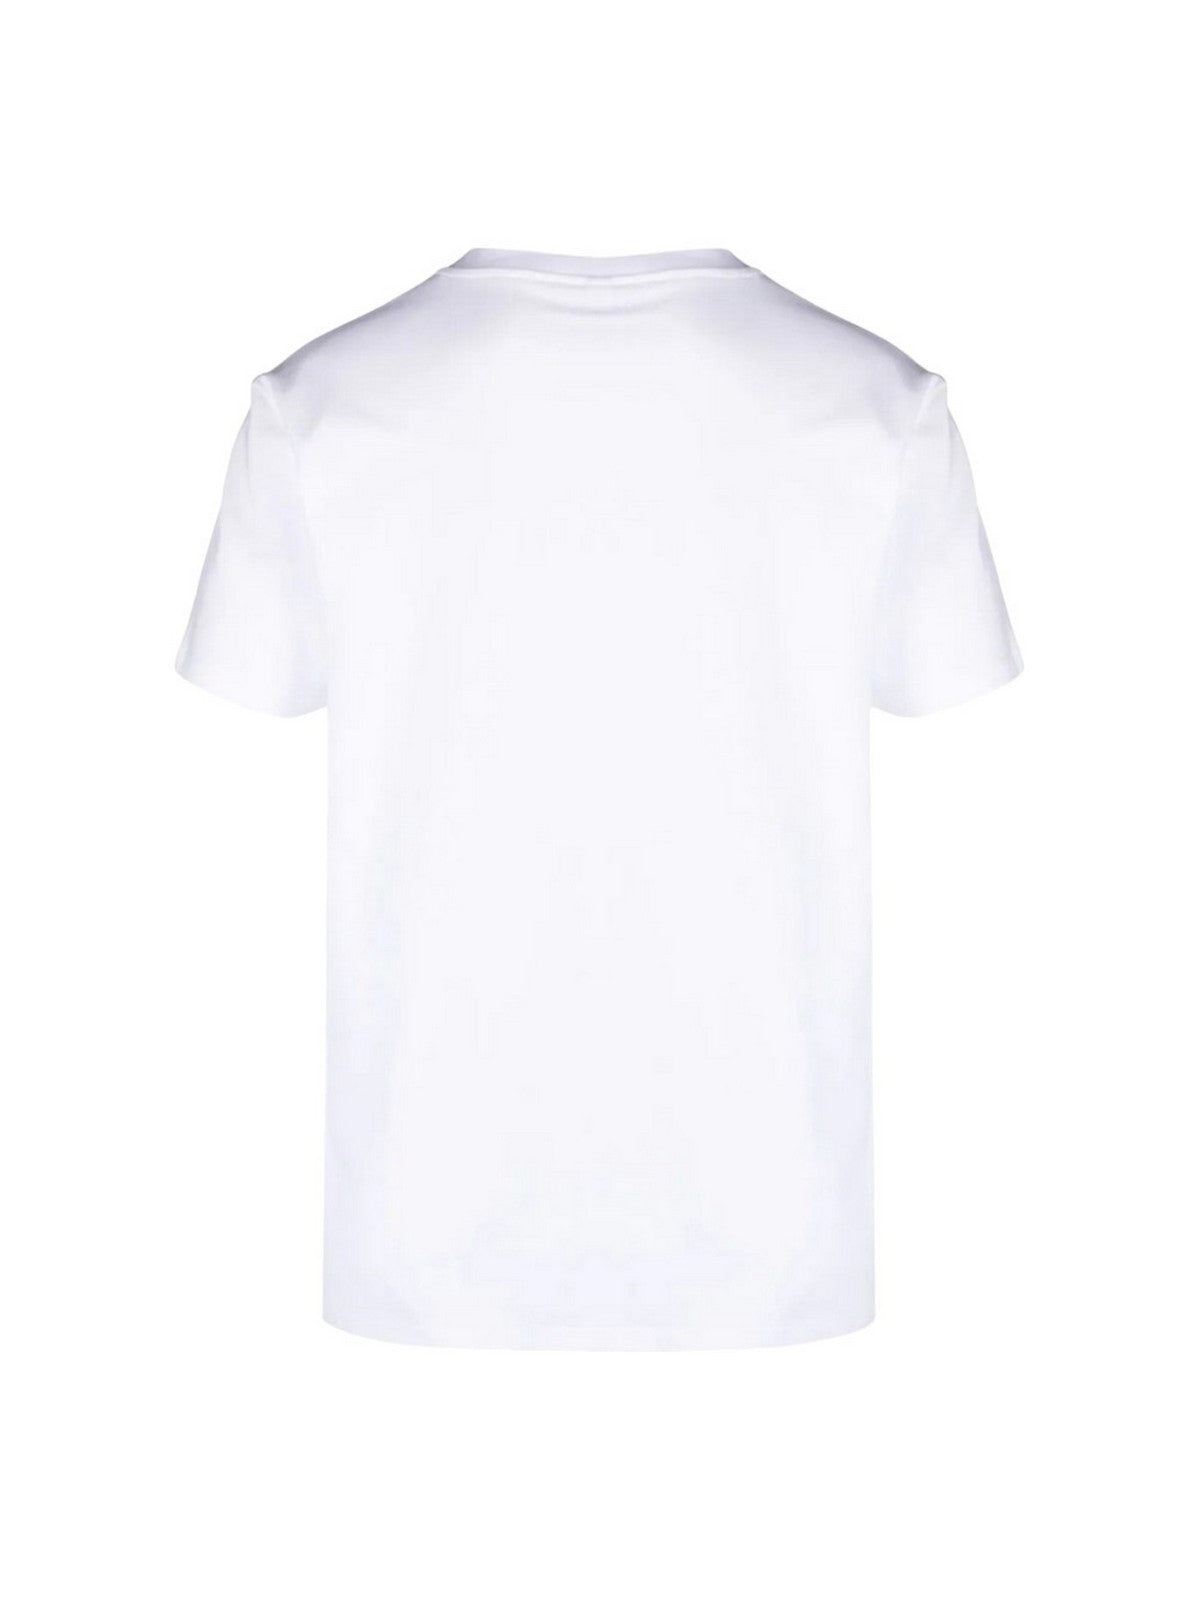 MOSCHINO UNDERWEAR T-Shirt e Polo Uomo  241V1A0703 4406 1 Bianco